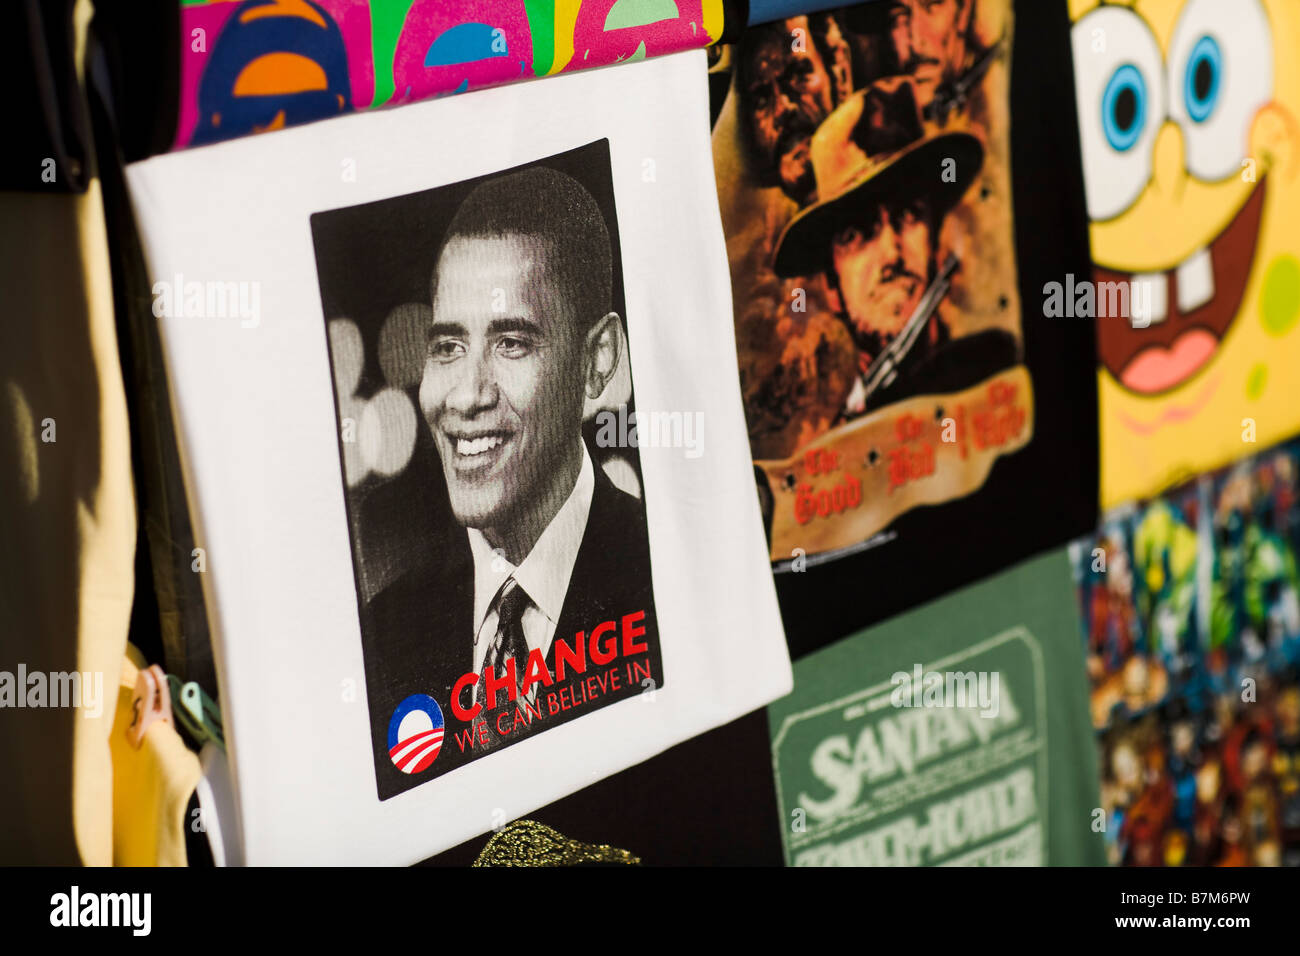 Obama-Tee Shirt Venice Beach Los Angeles County Kalifornien Vereinigte Staaten Stockfoto